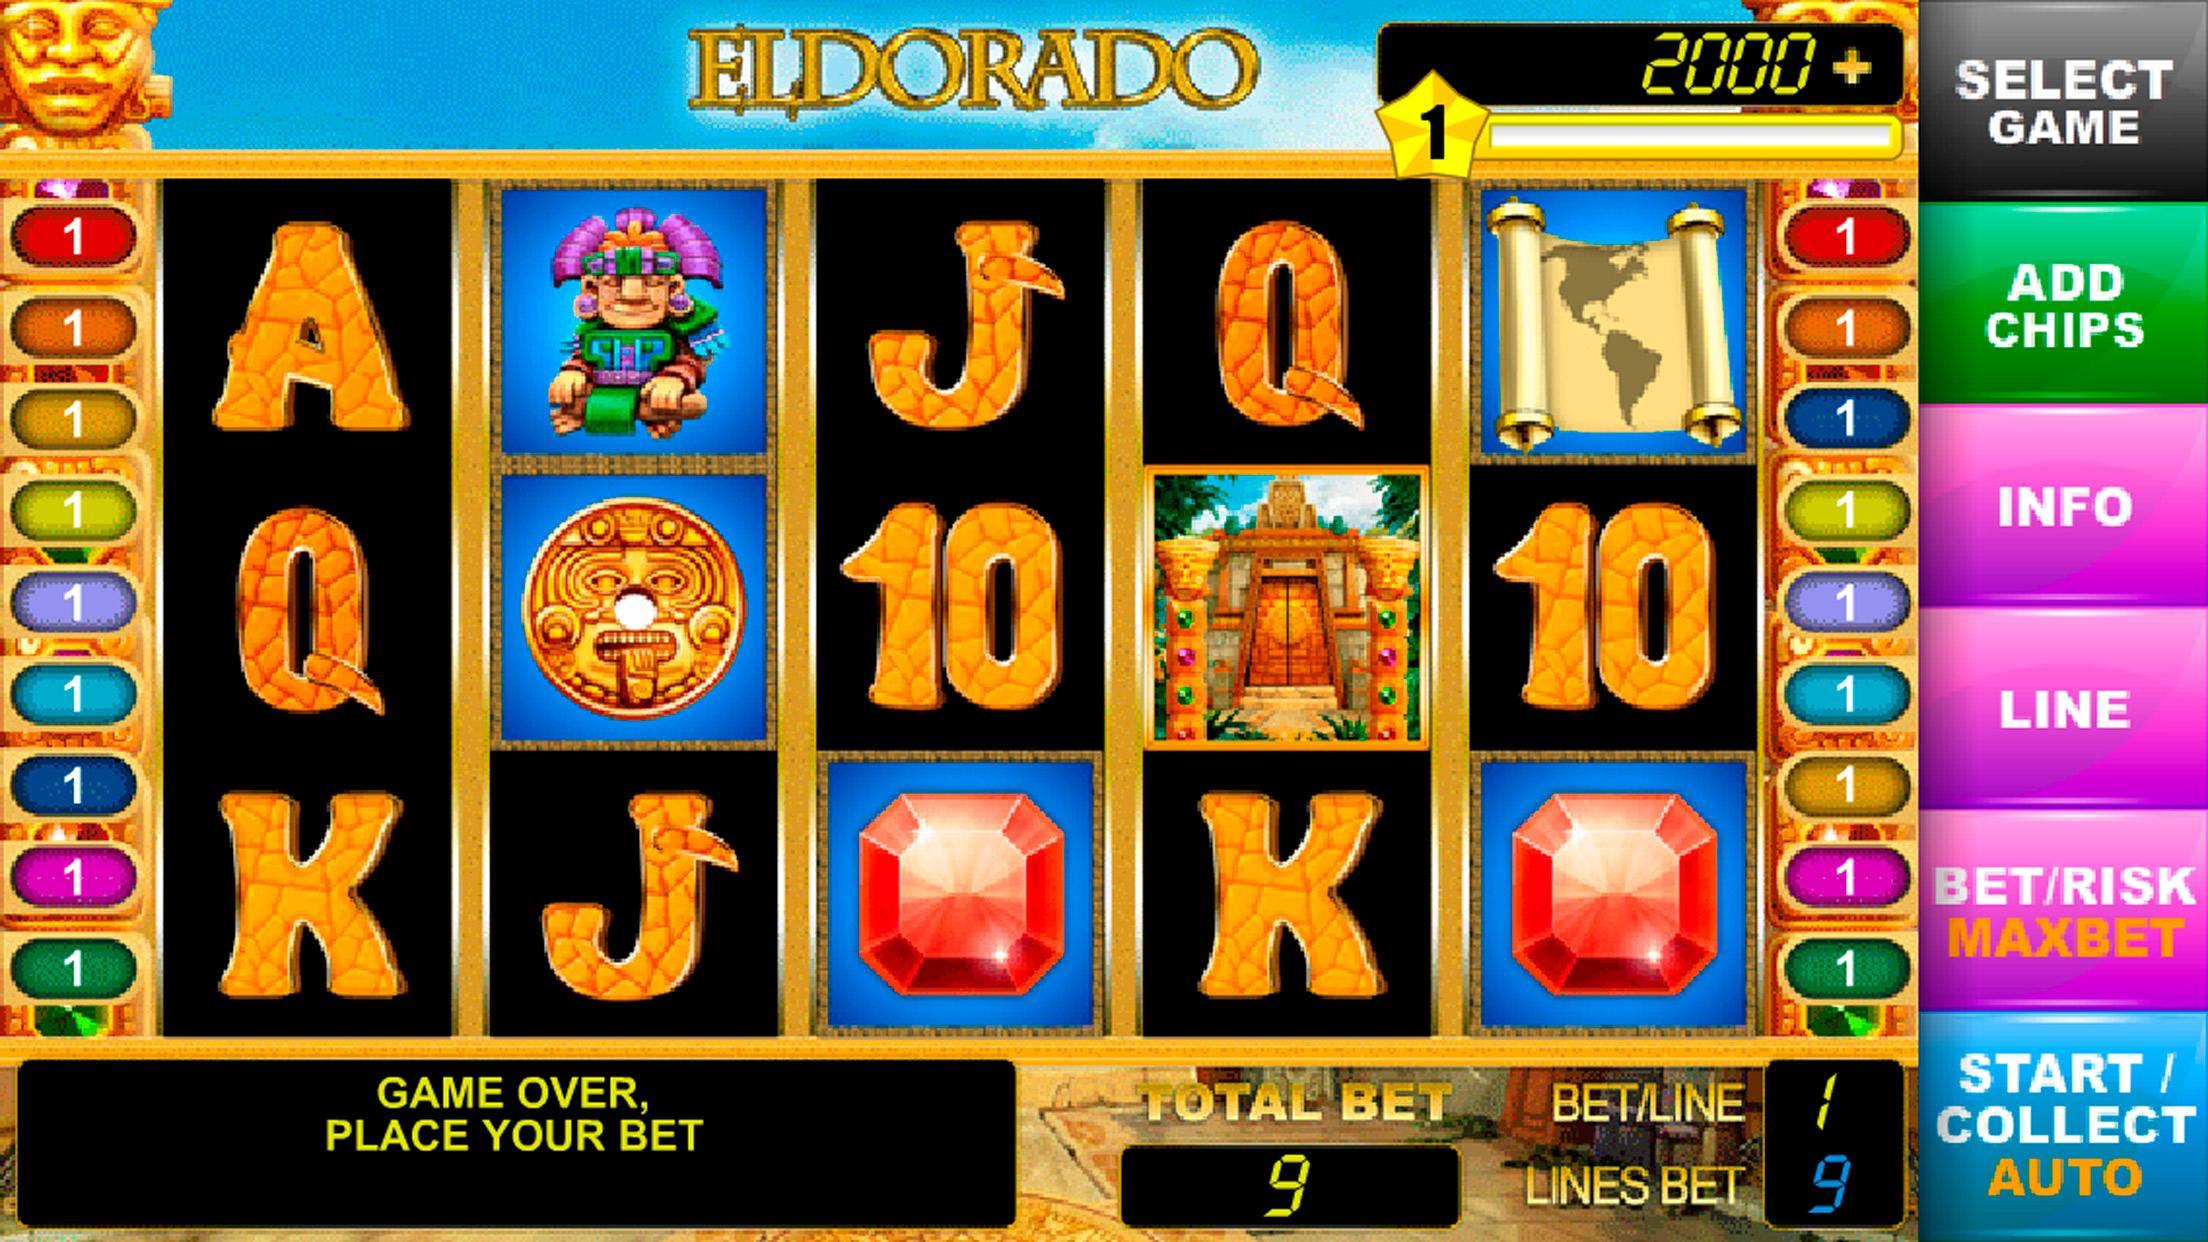 Eldorado Slot. Mystery of Eldorado Slot. Eldorado Slot Golden age. Игра Эльдорадо квест.